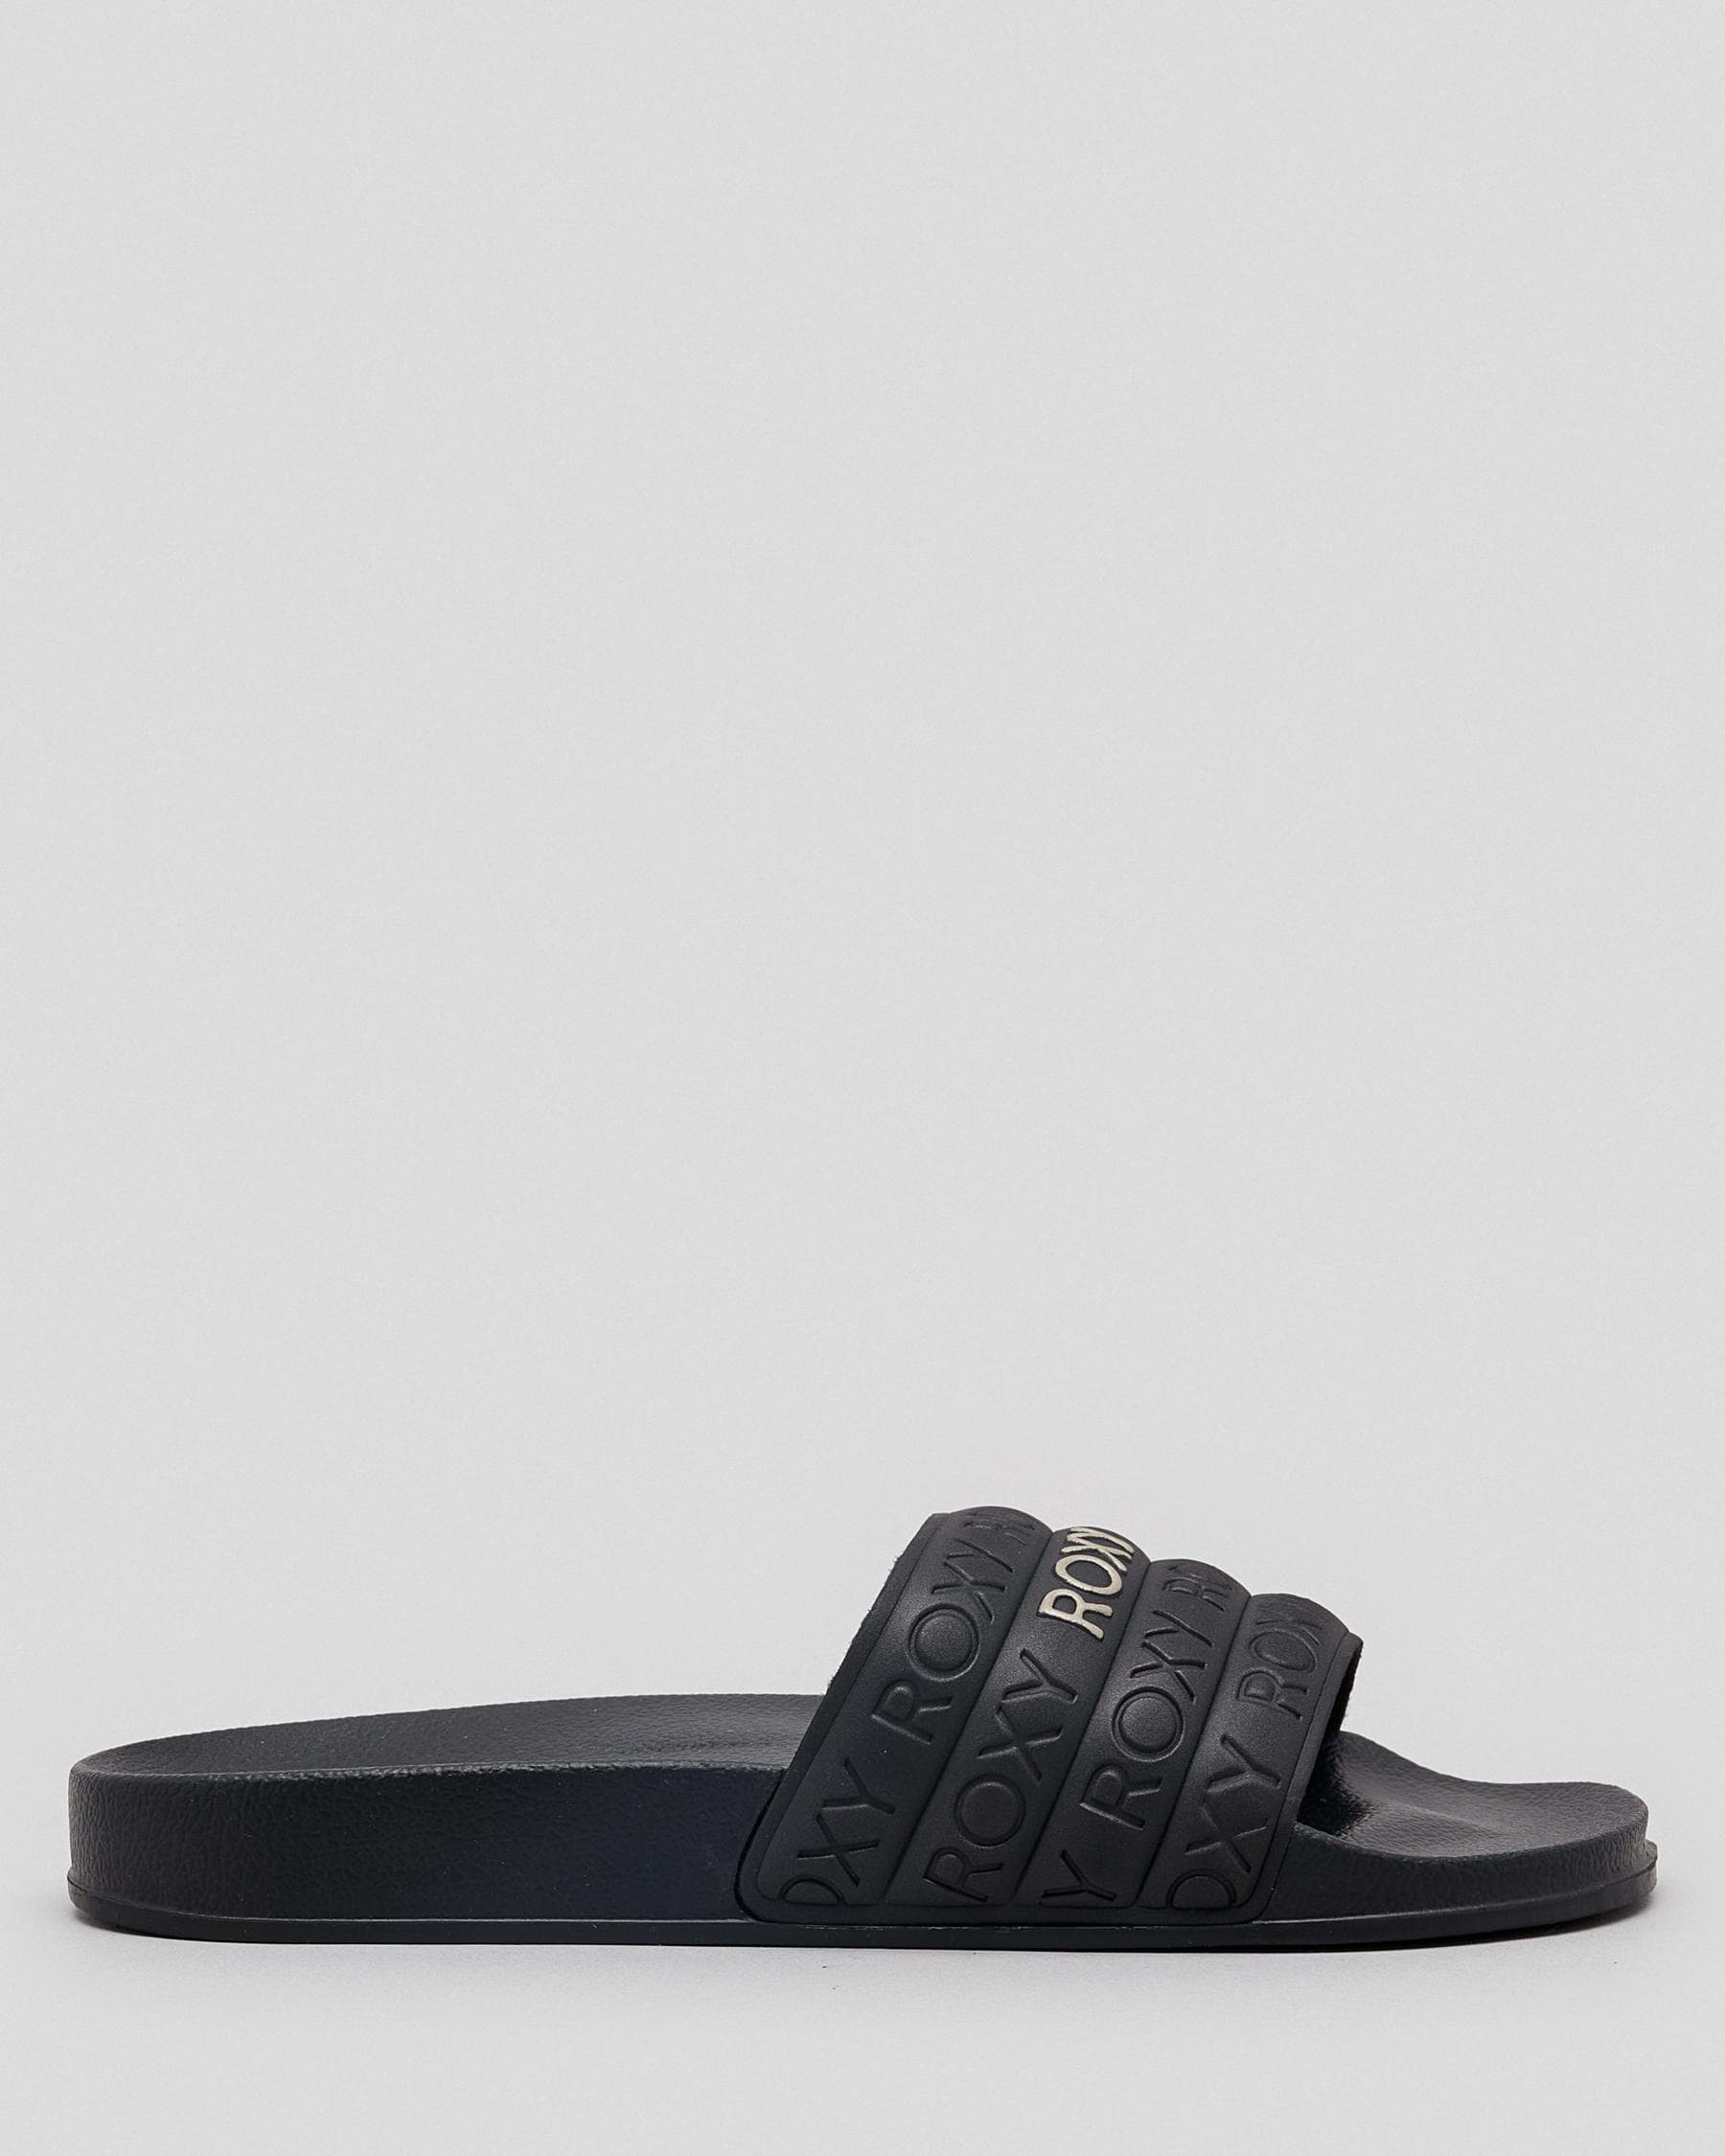 Roxy Slippy WP Slide Sandals In Black/m Gold - Fast Shipping & Easy ...